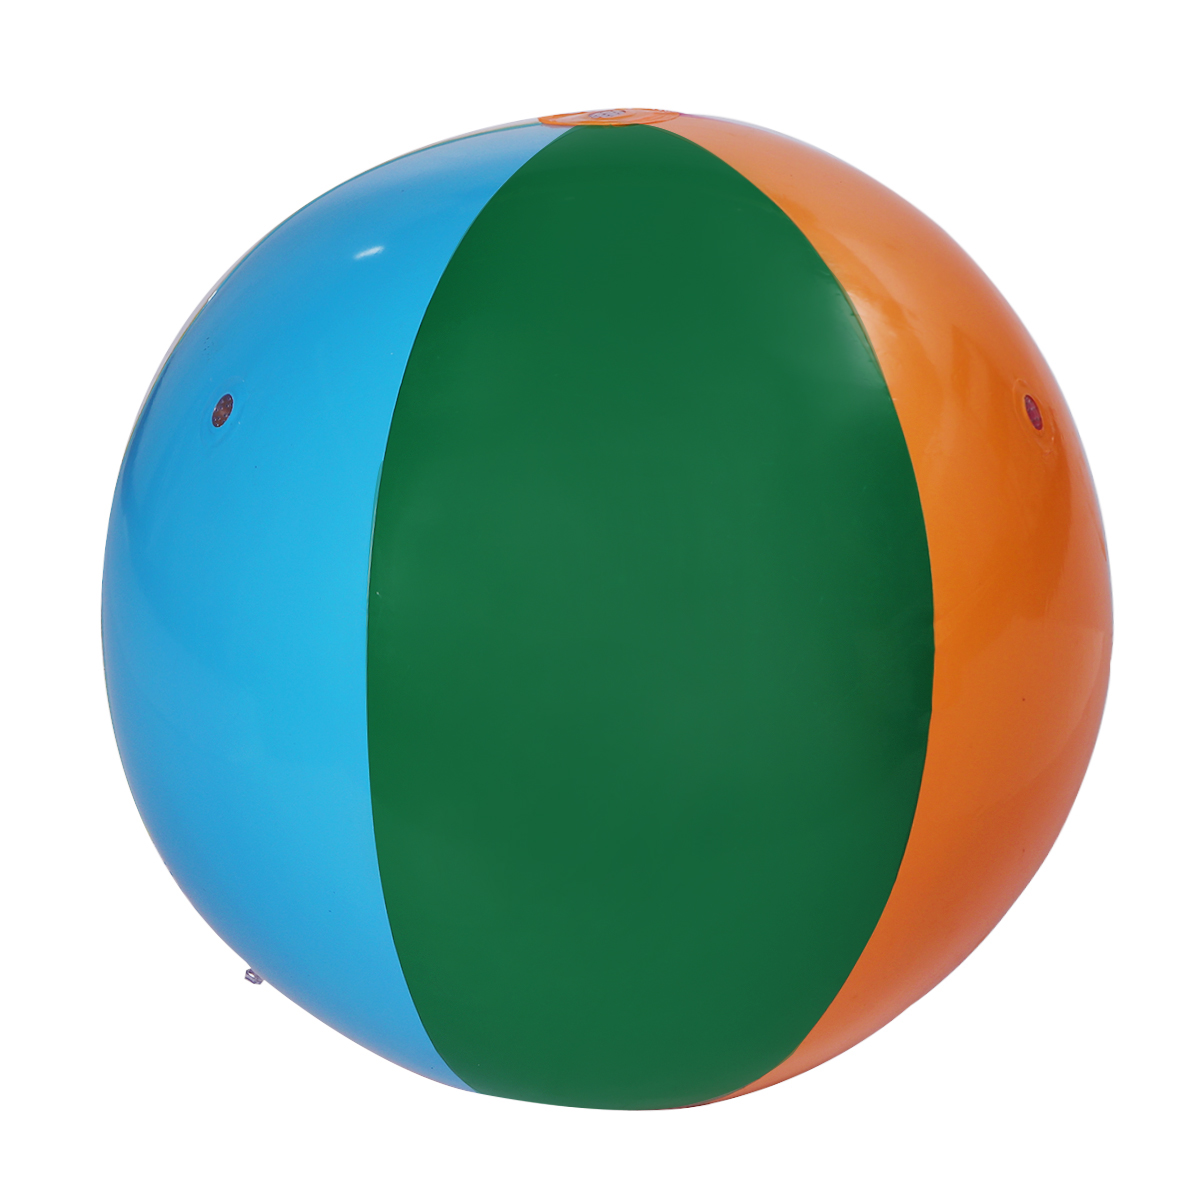 Rainbow-Beach-Balls-Inflatable-Water-Spray-Beach-Ball-Summer-Outdoor-Sport-Game-Kids-Sprinkler-Toy-b-1880289-9